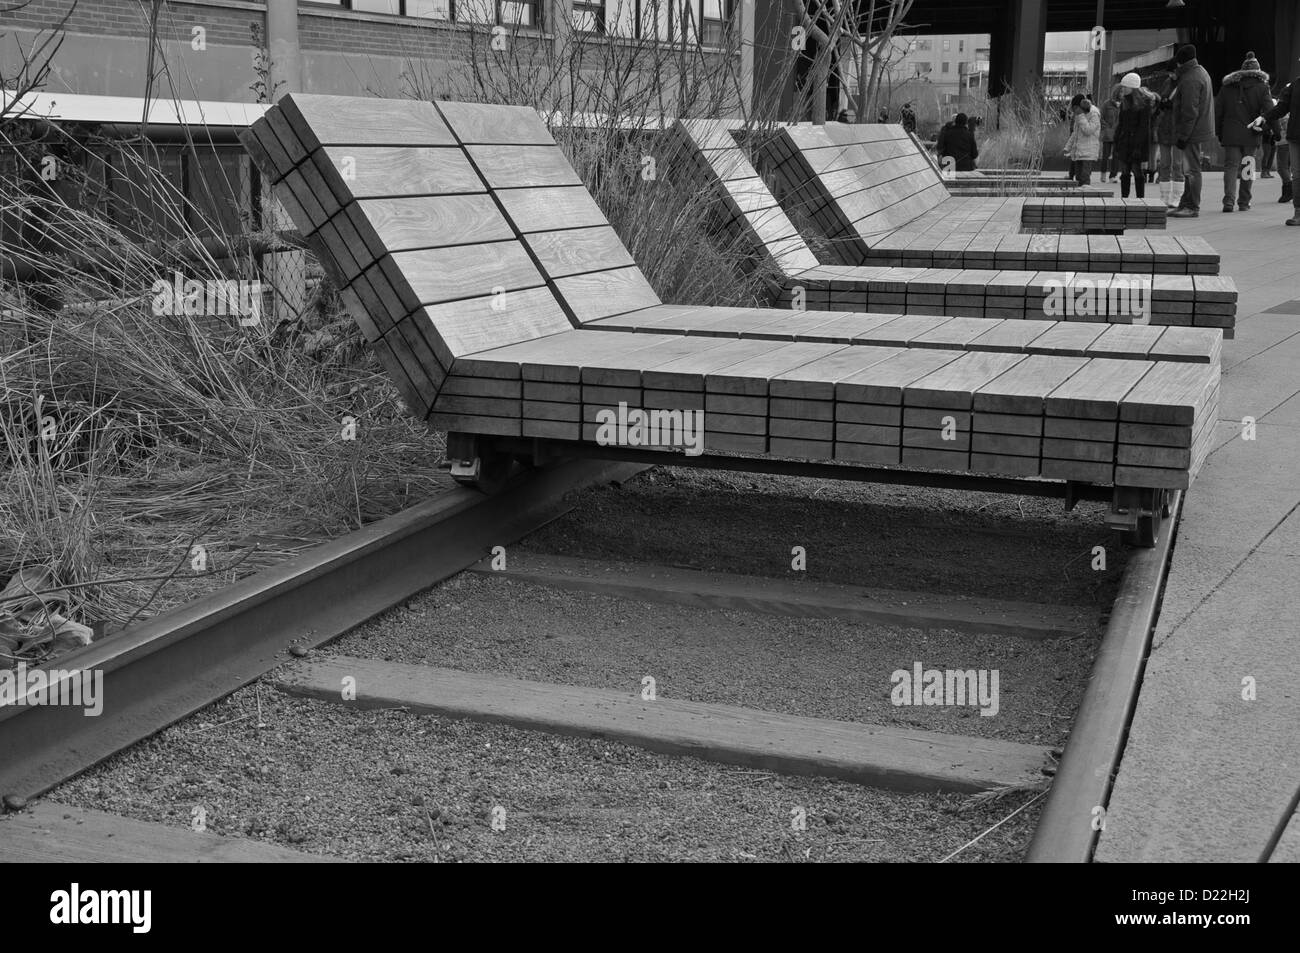 Sun loungers on the Highline park's elevated railway tracks, New York Stock Photo